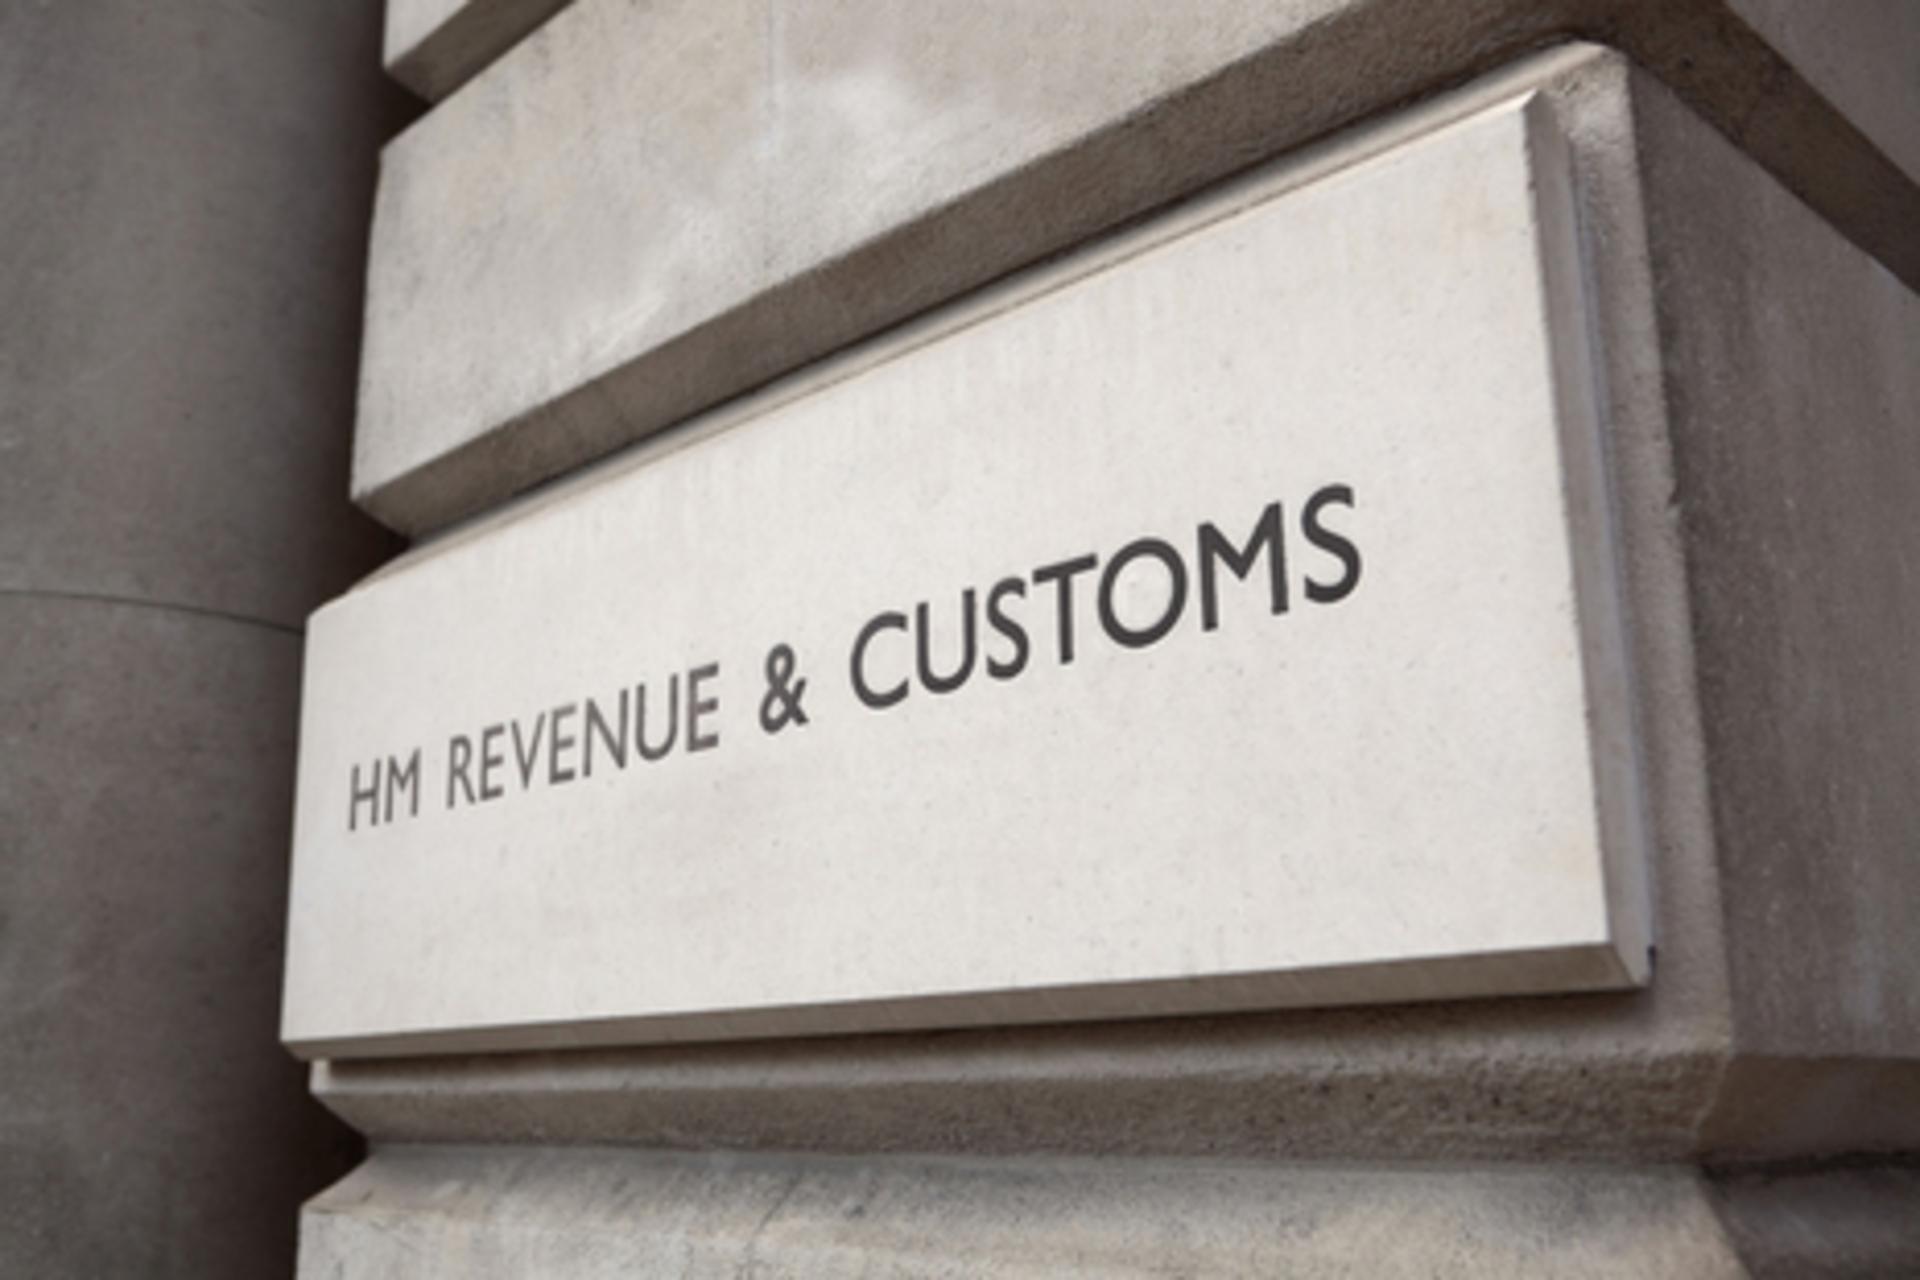 HMRC faces balancing act as unpaid taxes rise to £65.5bn